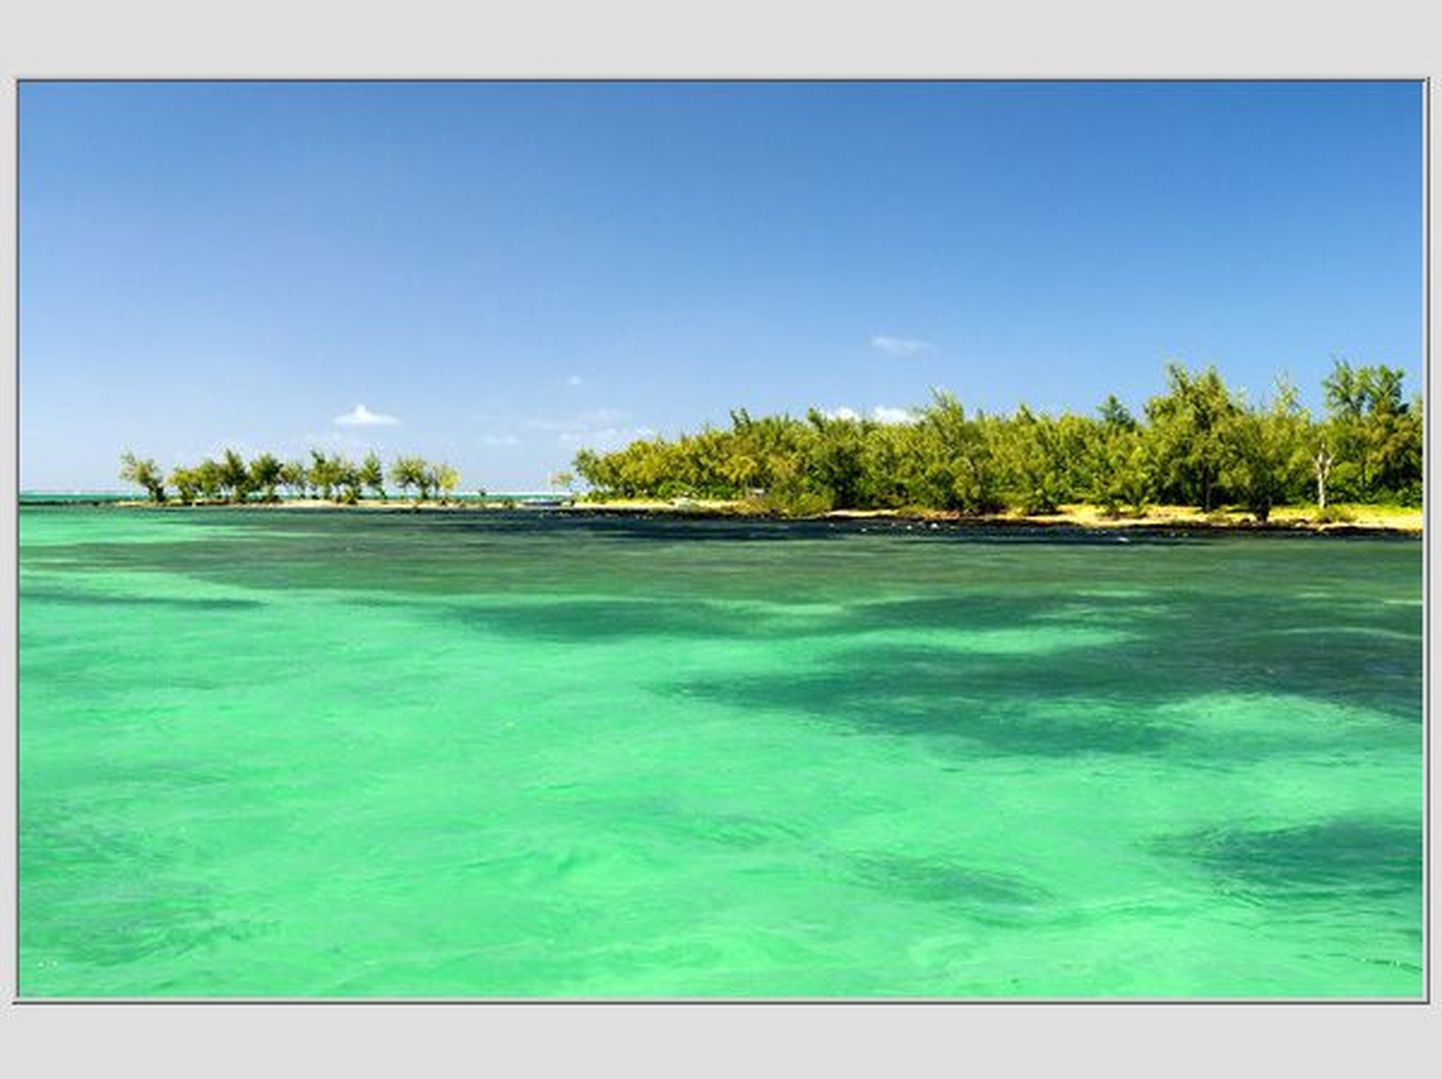 Mauritiuse saar India ookeanis.